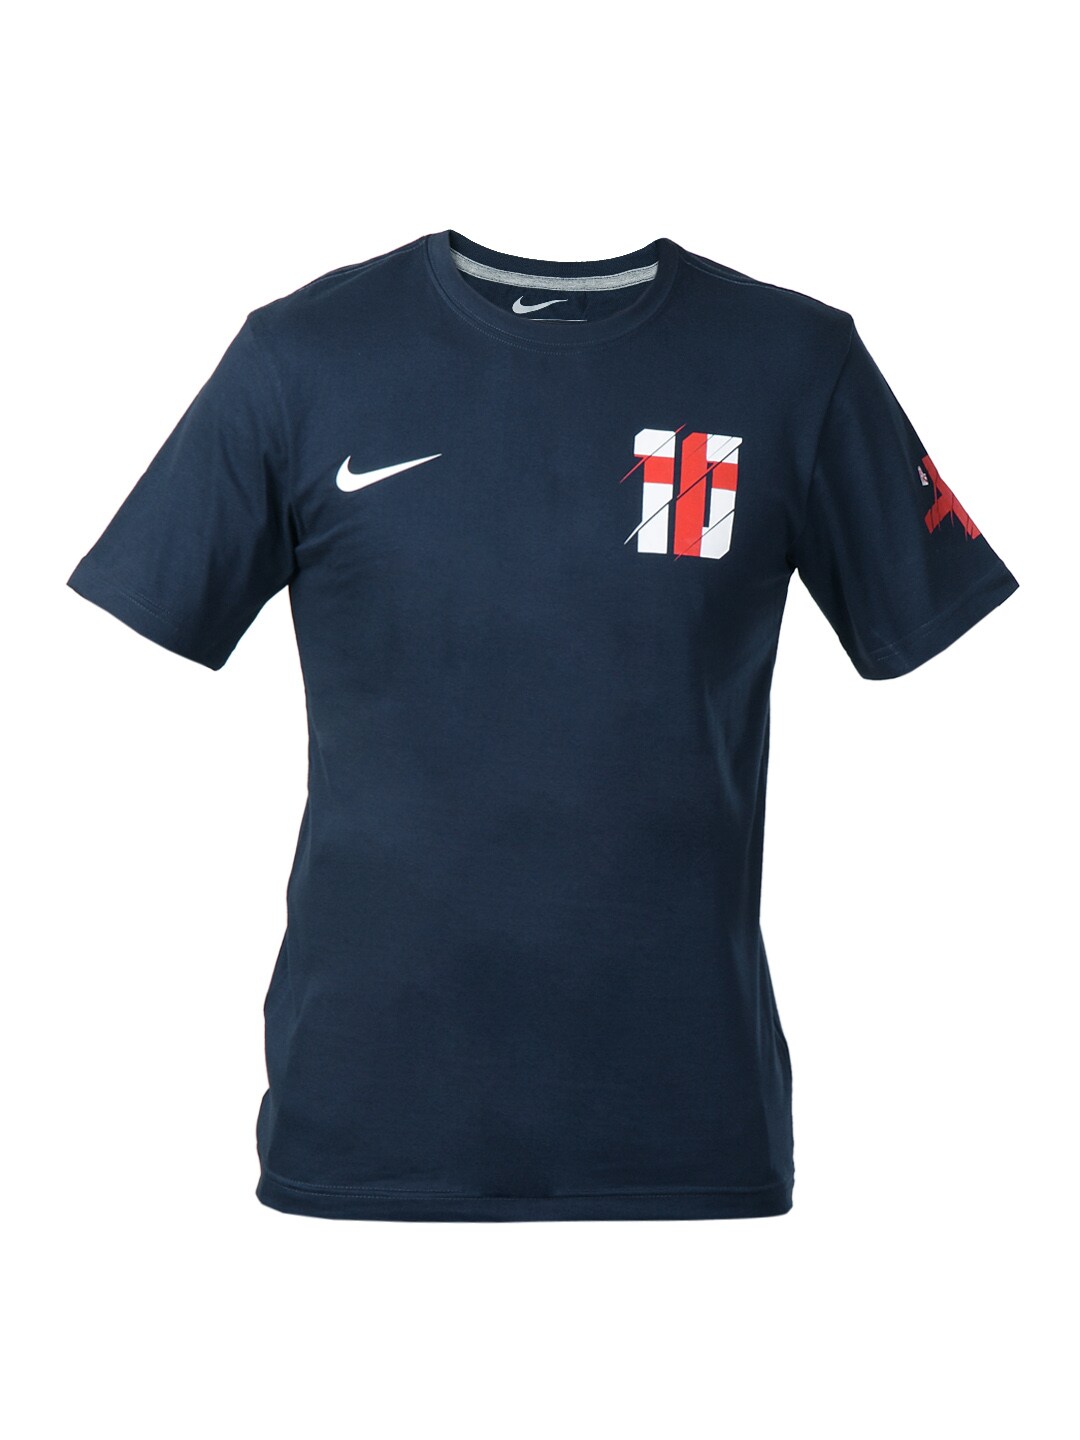 Nike Men Navy Blue Rooney Football T-shirt